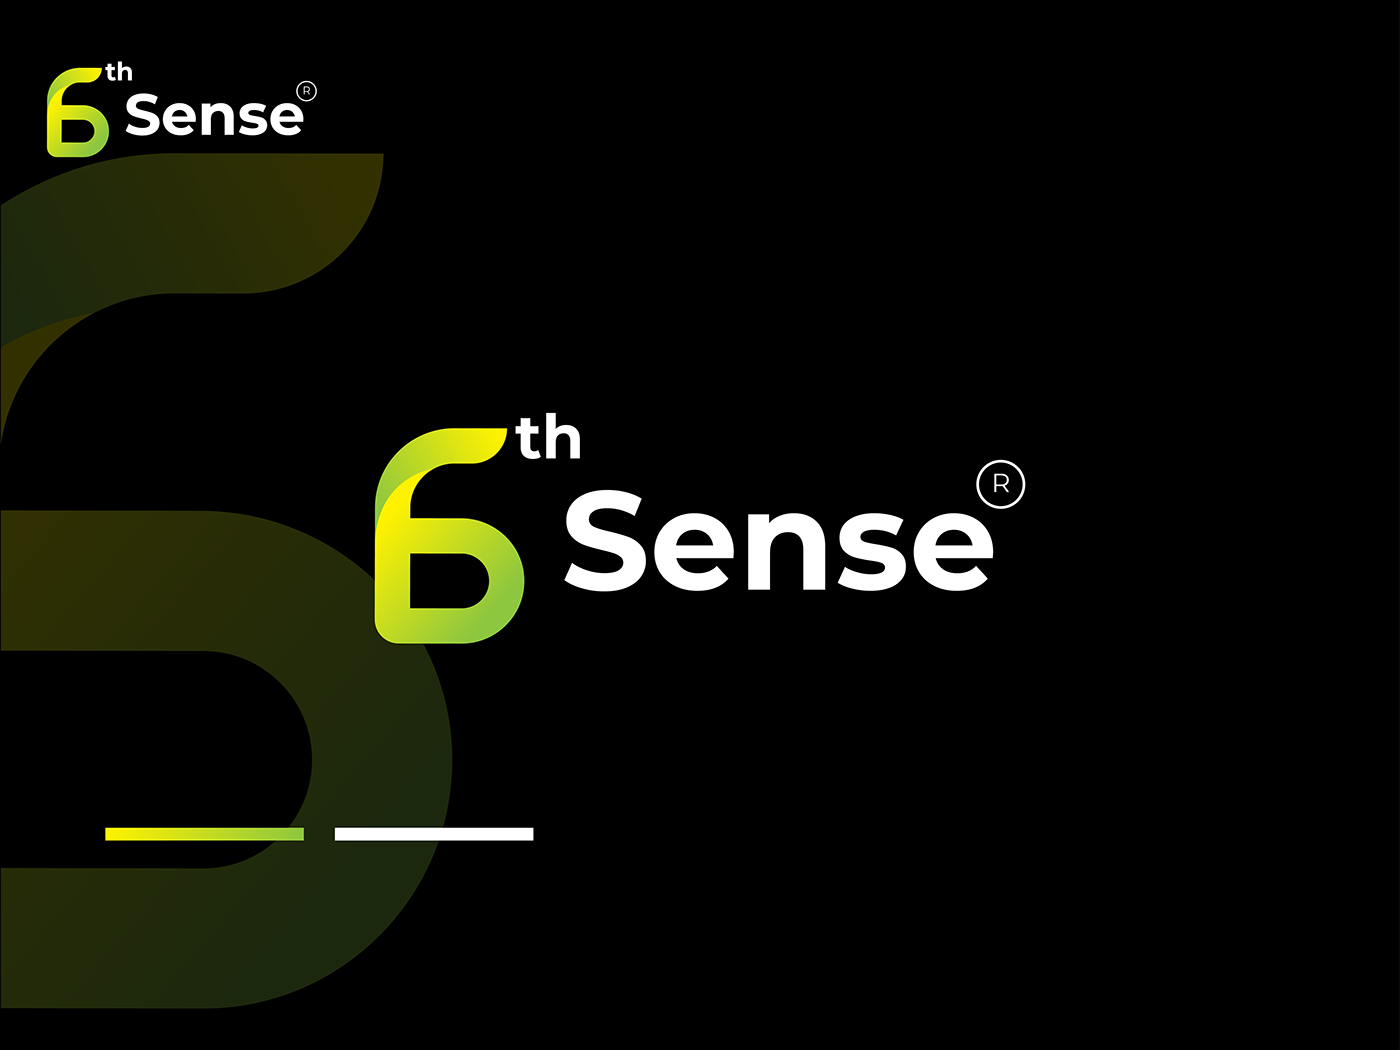 6th sense 3d logo 6th sense abstract logo 6th sense logo abstract logo Business Logo creative logo Modern Logo professional logo unique logo